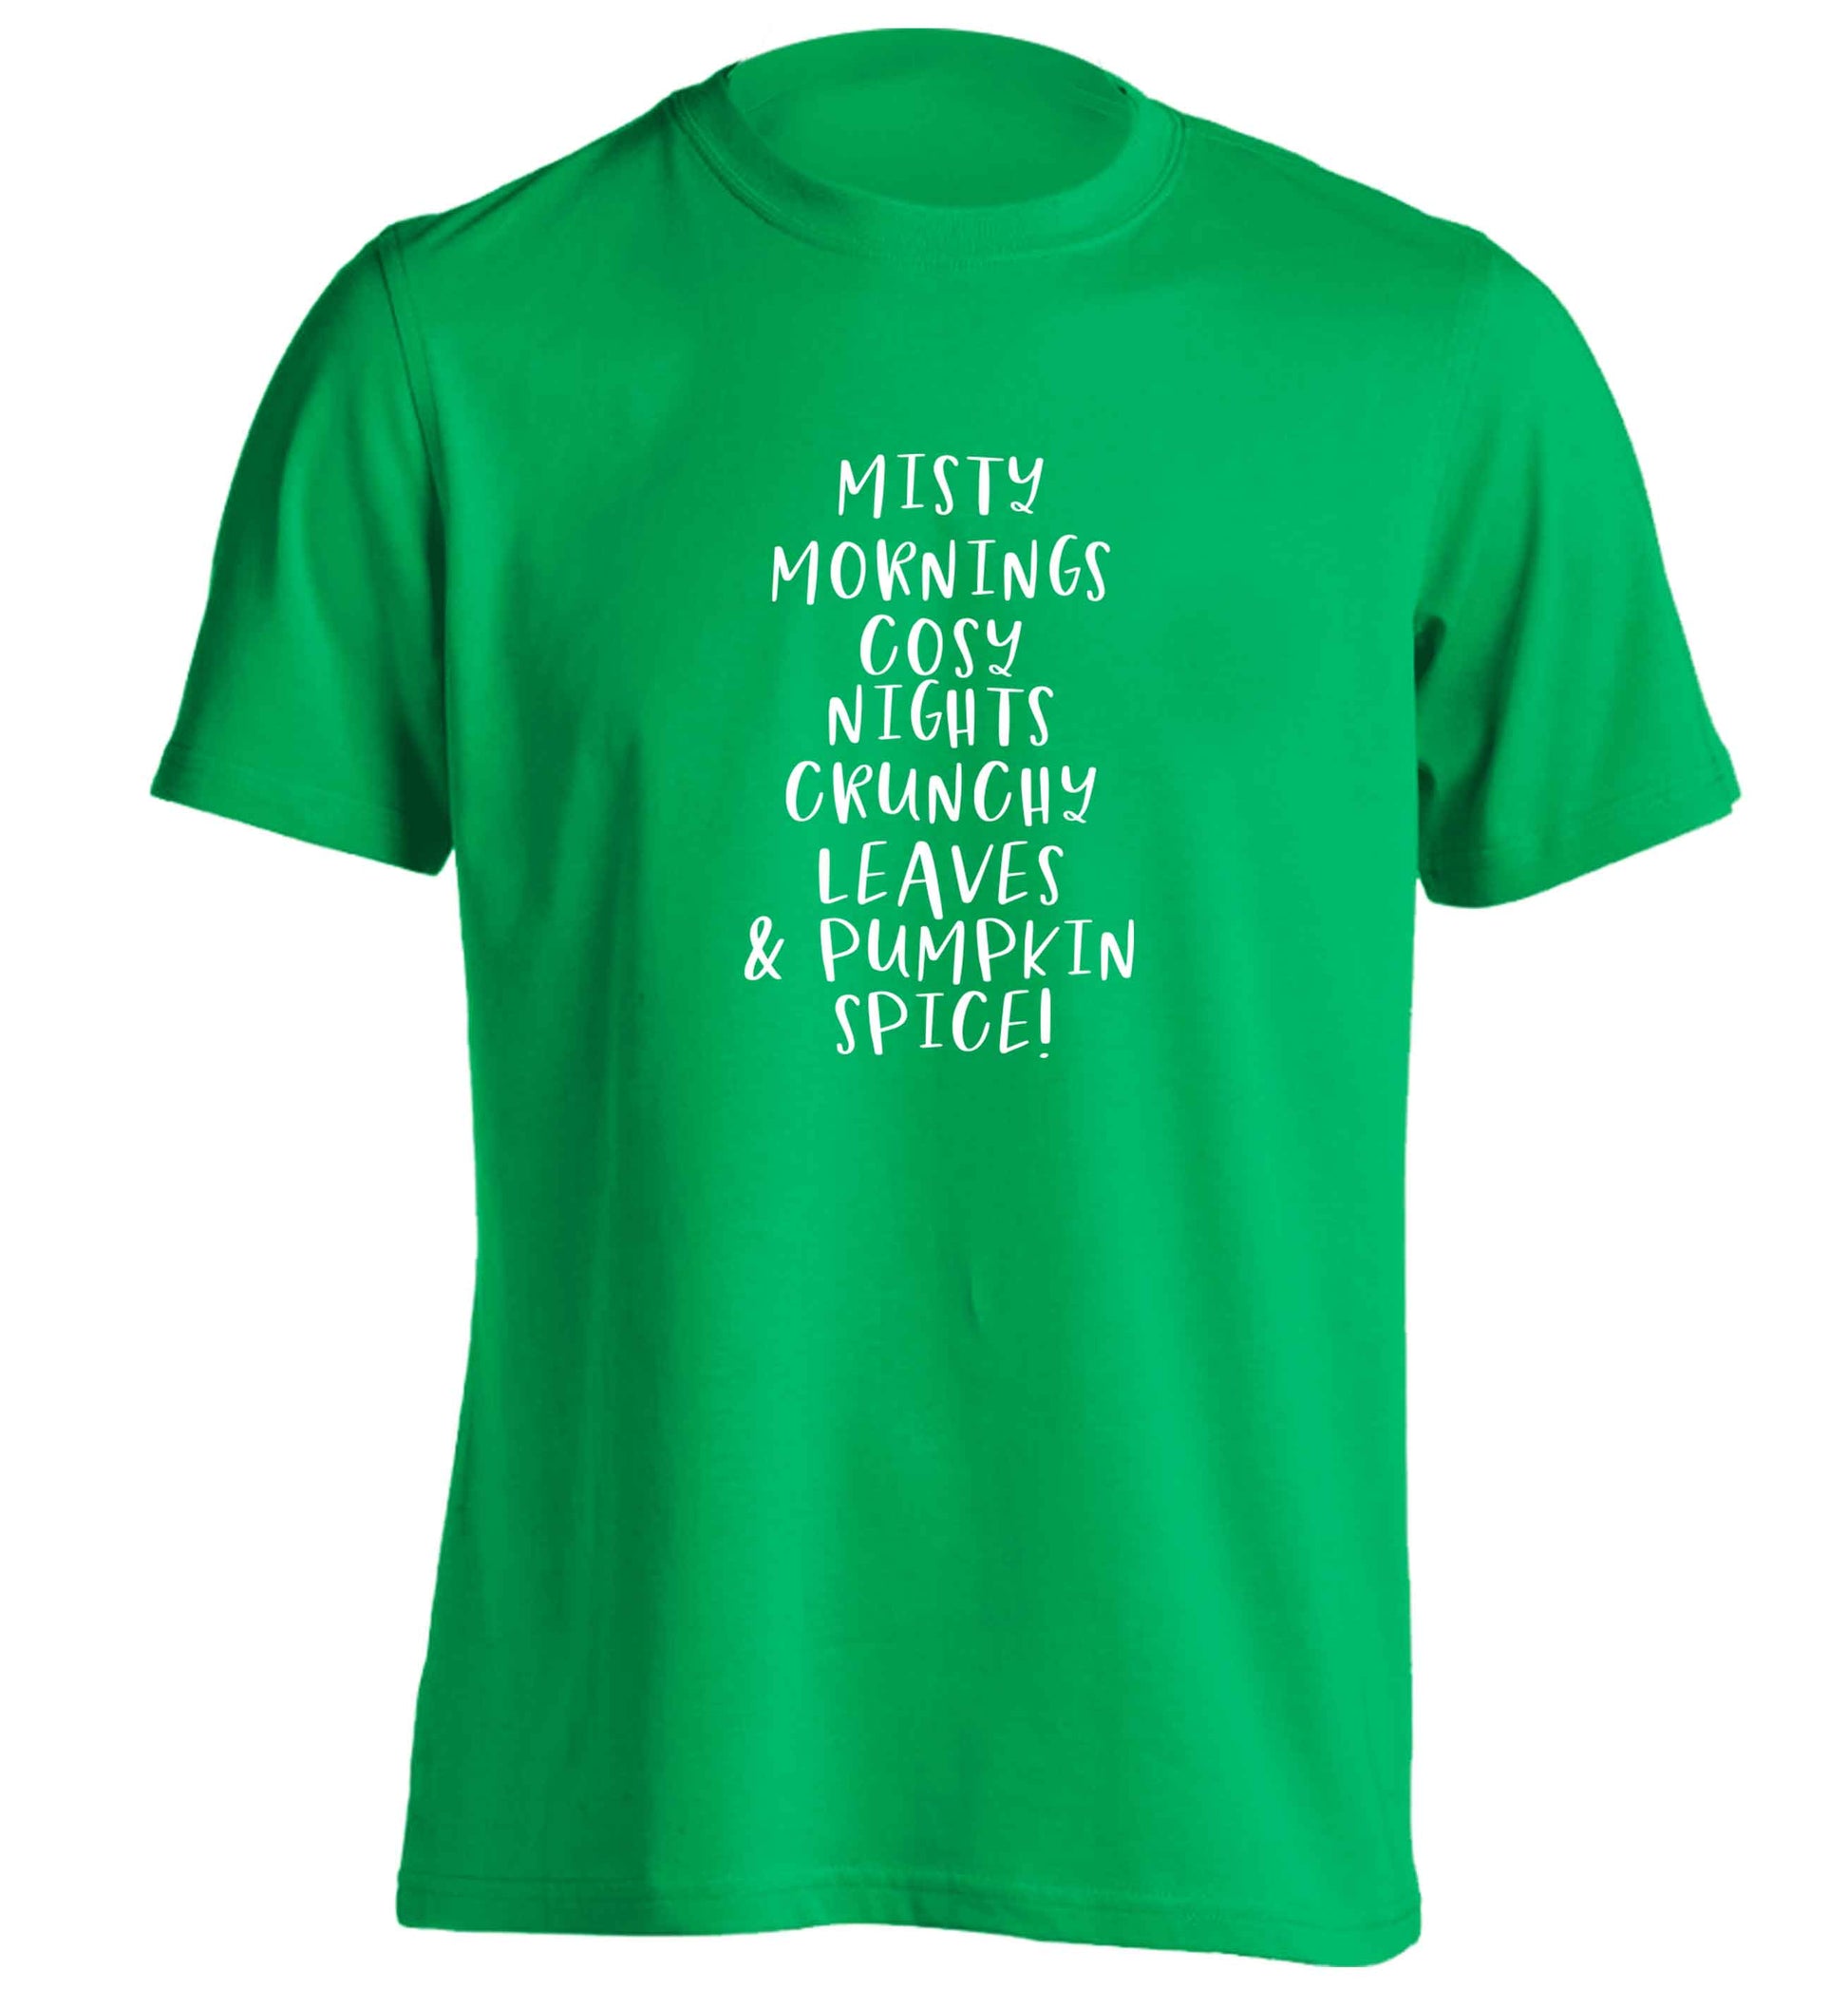 Misty Mornings adults unisex green Tshirt 2XL